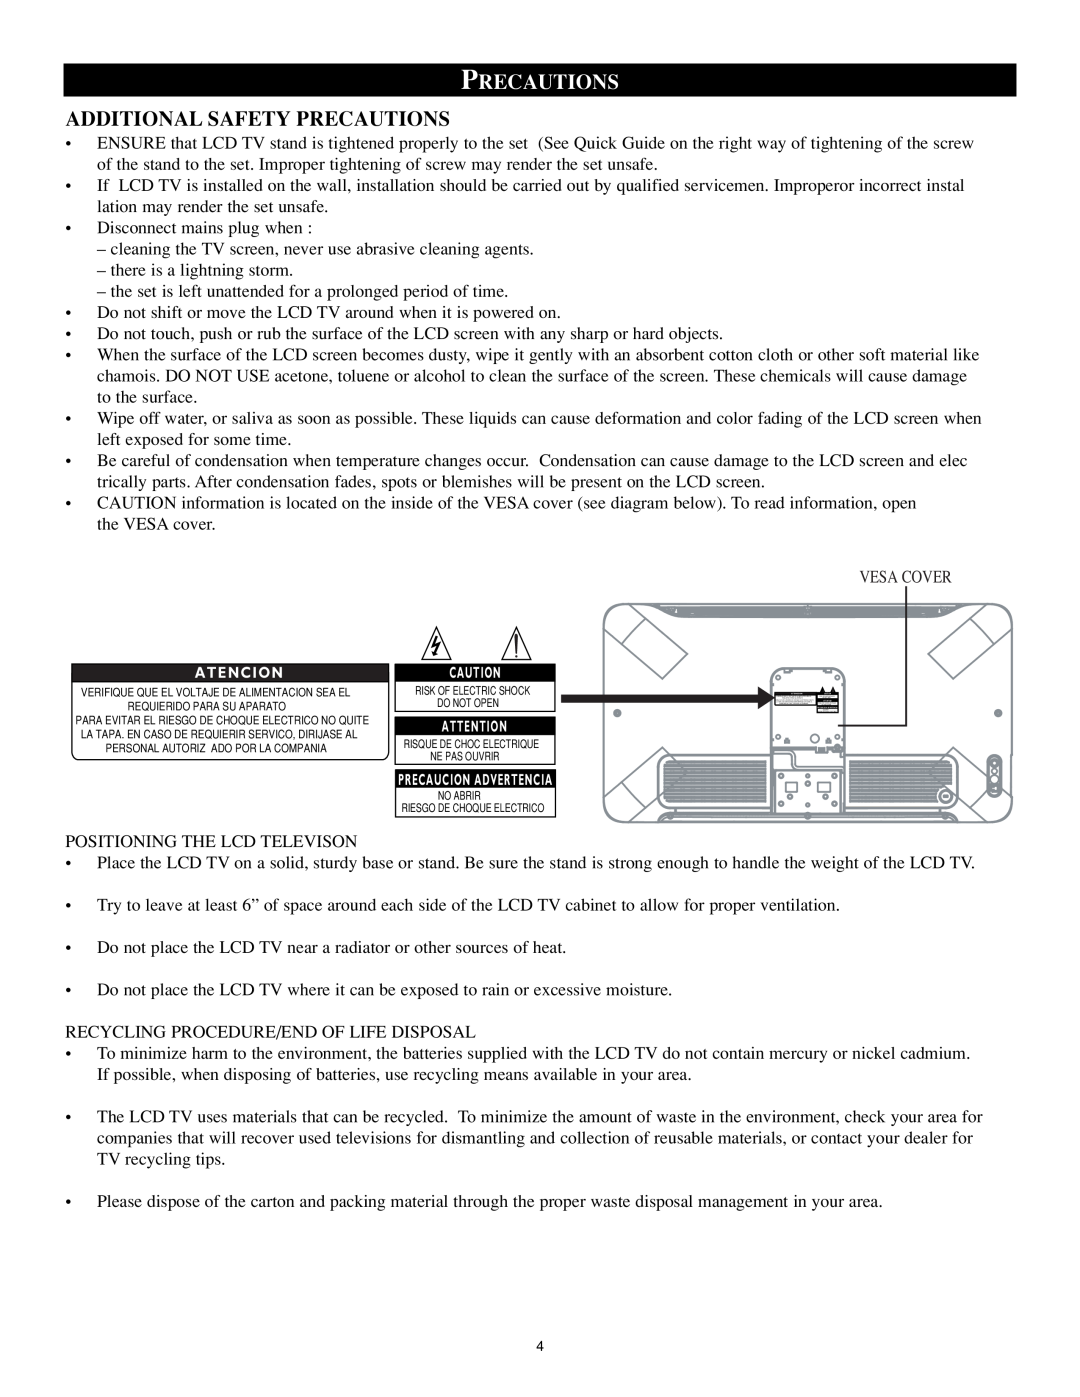 Philips 17PF9946/37 user manual Additional Safety Precautions, Vesa Cover 